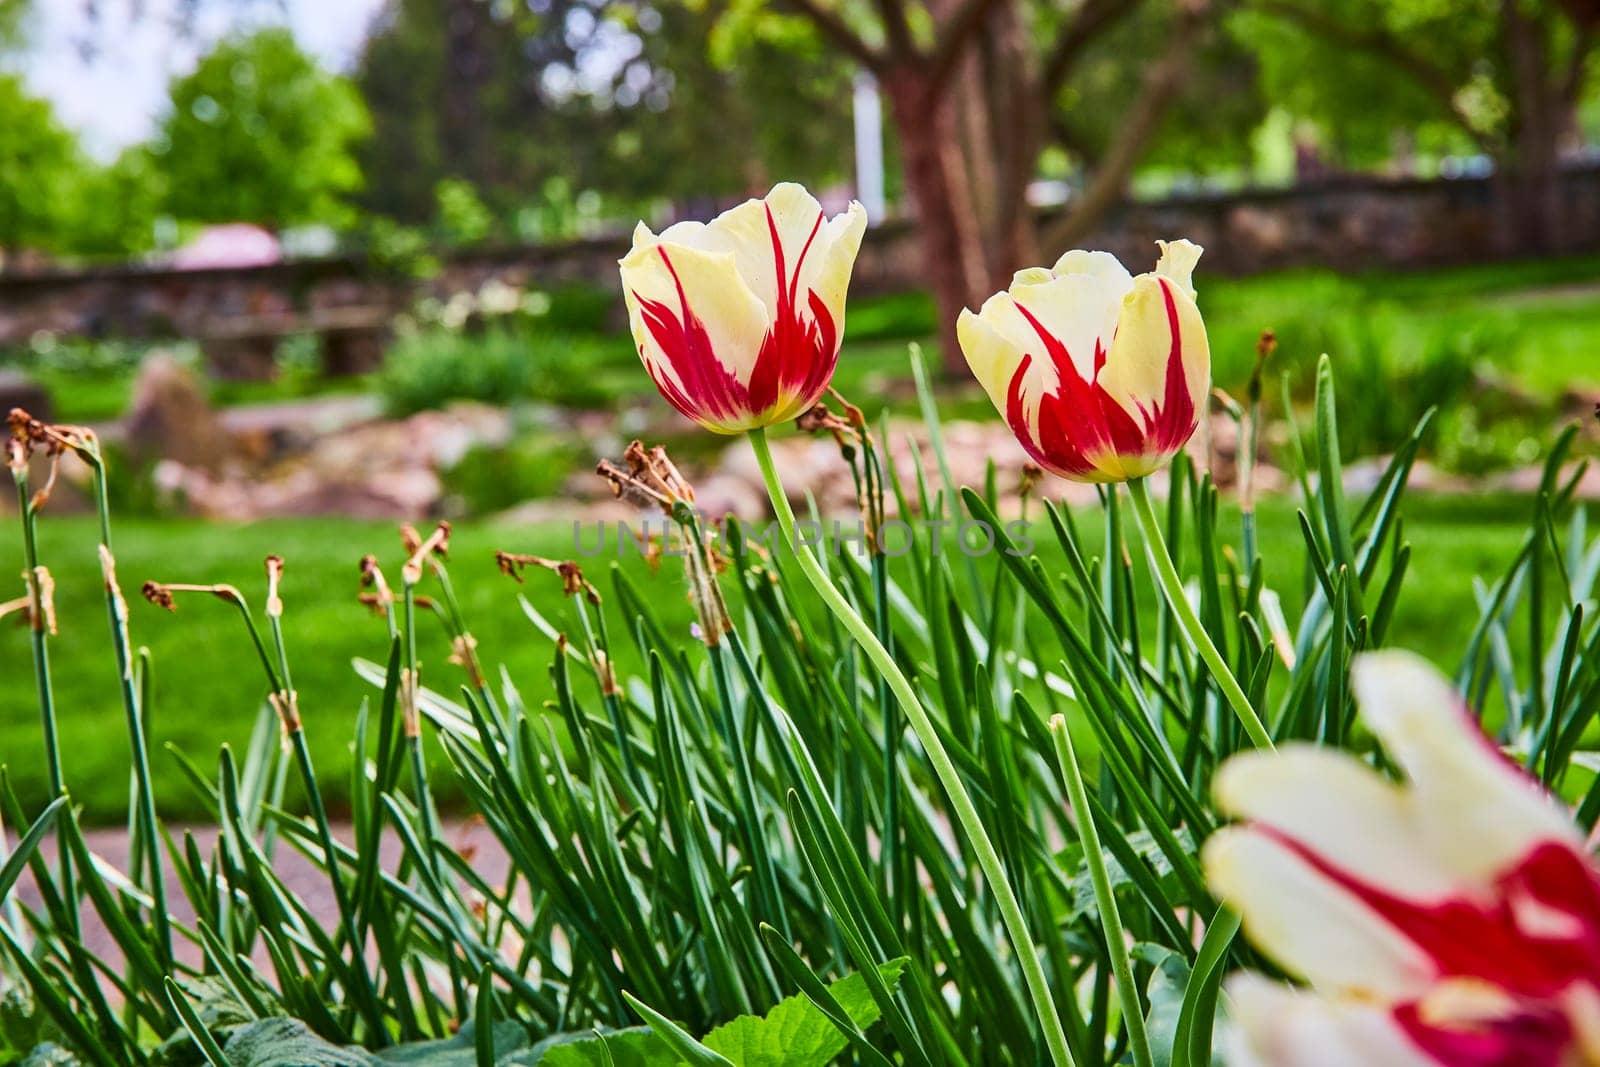 Vibrant tulips bloom in Warsaw Biblical Gardens, Indiana, showcasing spring renewal amidst lush greenery.